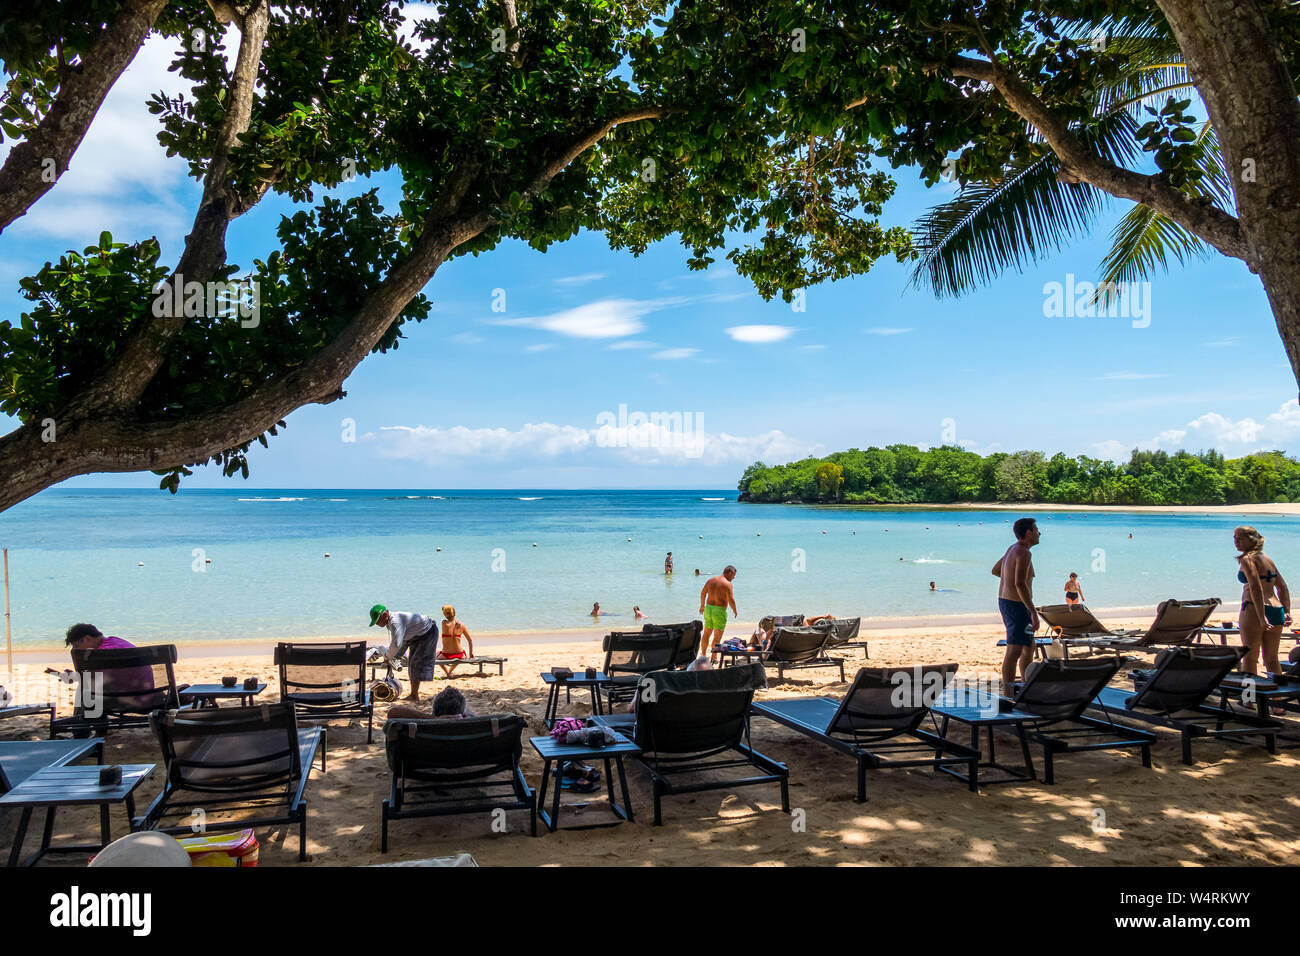 La gente relajándose en la playa de Nusa Dua, Nusa Dua, Bali, Indonesia Foto de stock